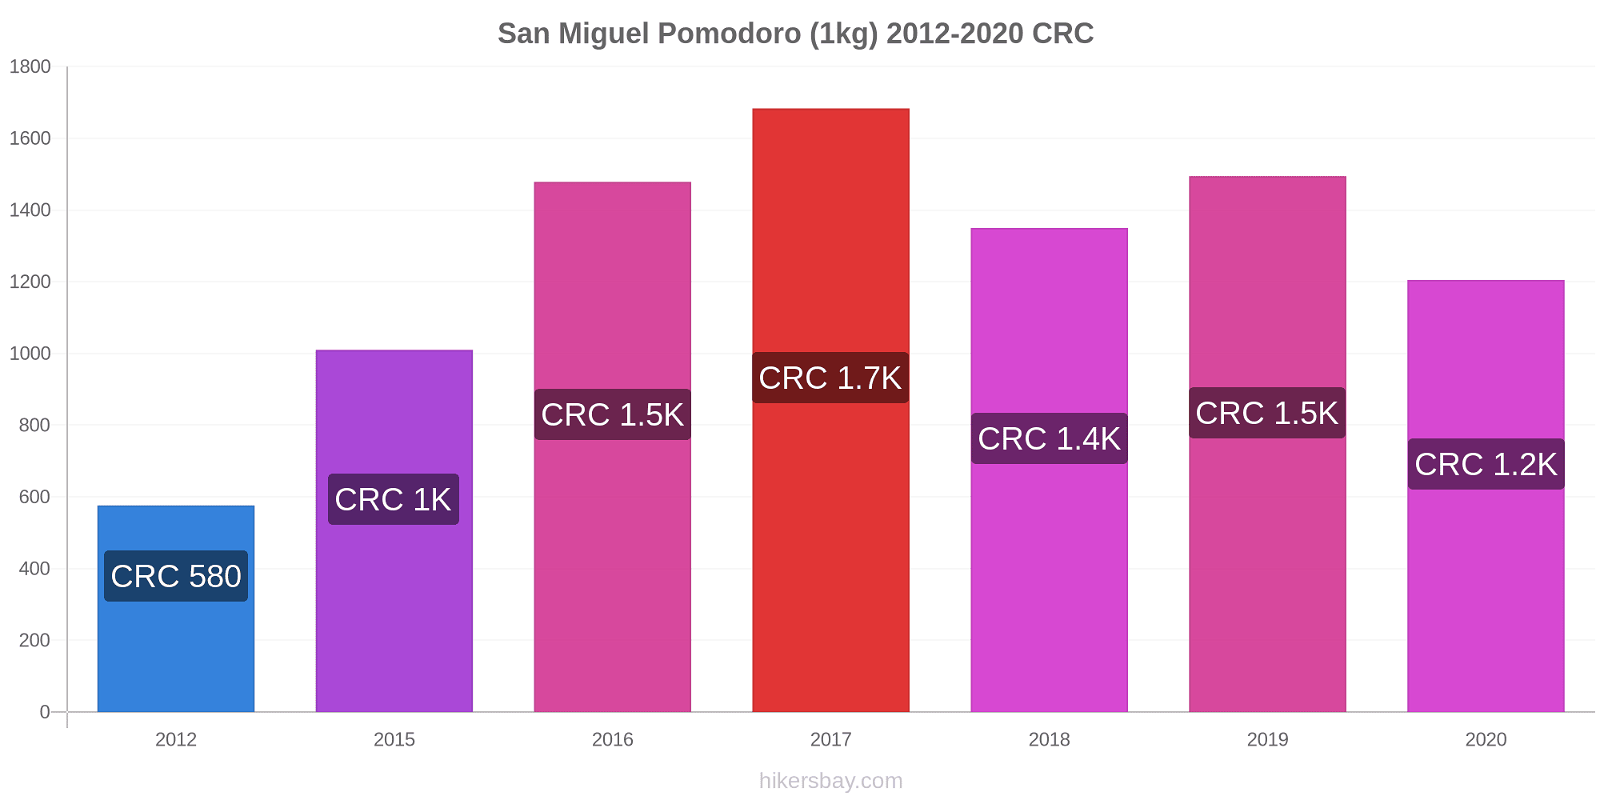 San Miguel variazioni di prezzo Pomodoro (1kg) hikersbay.com